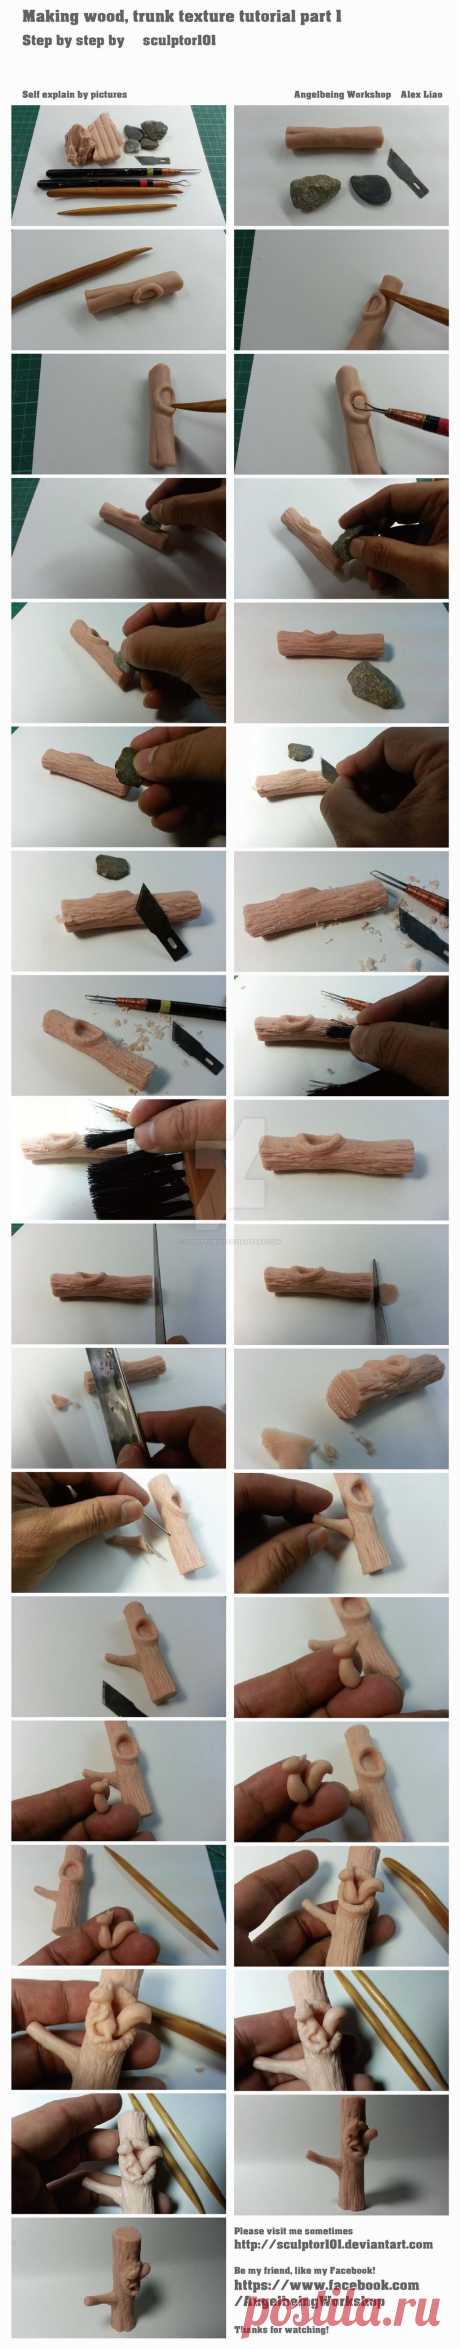 Making wood, trunk texture tutorial part 1 by sculptor101 on DeviantArt